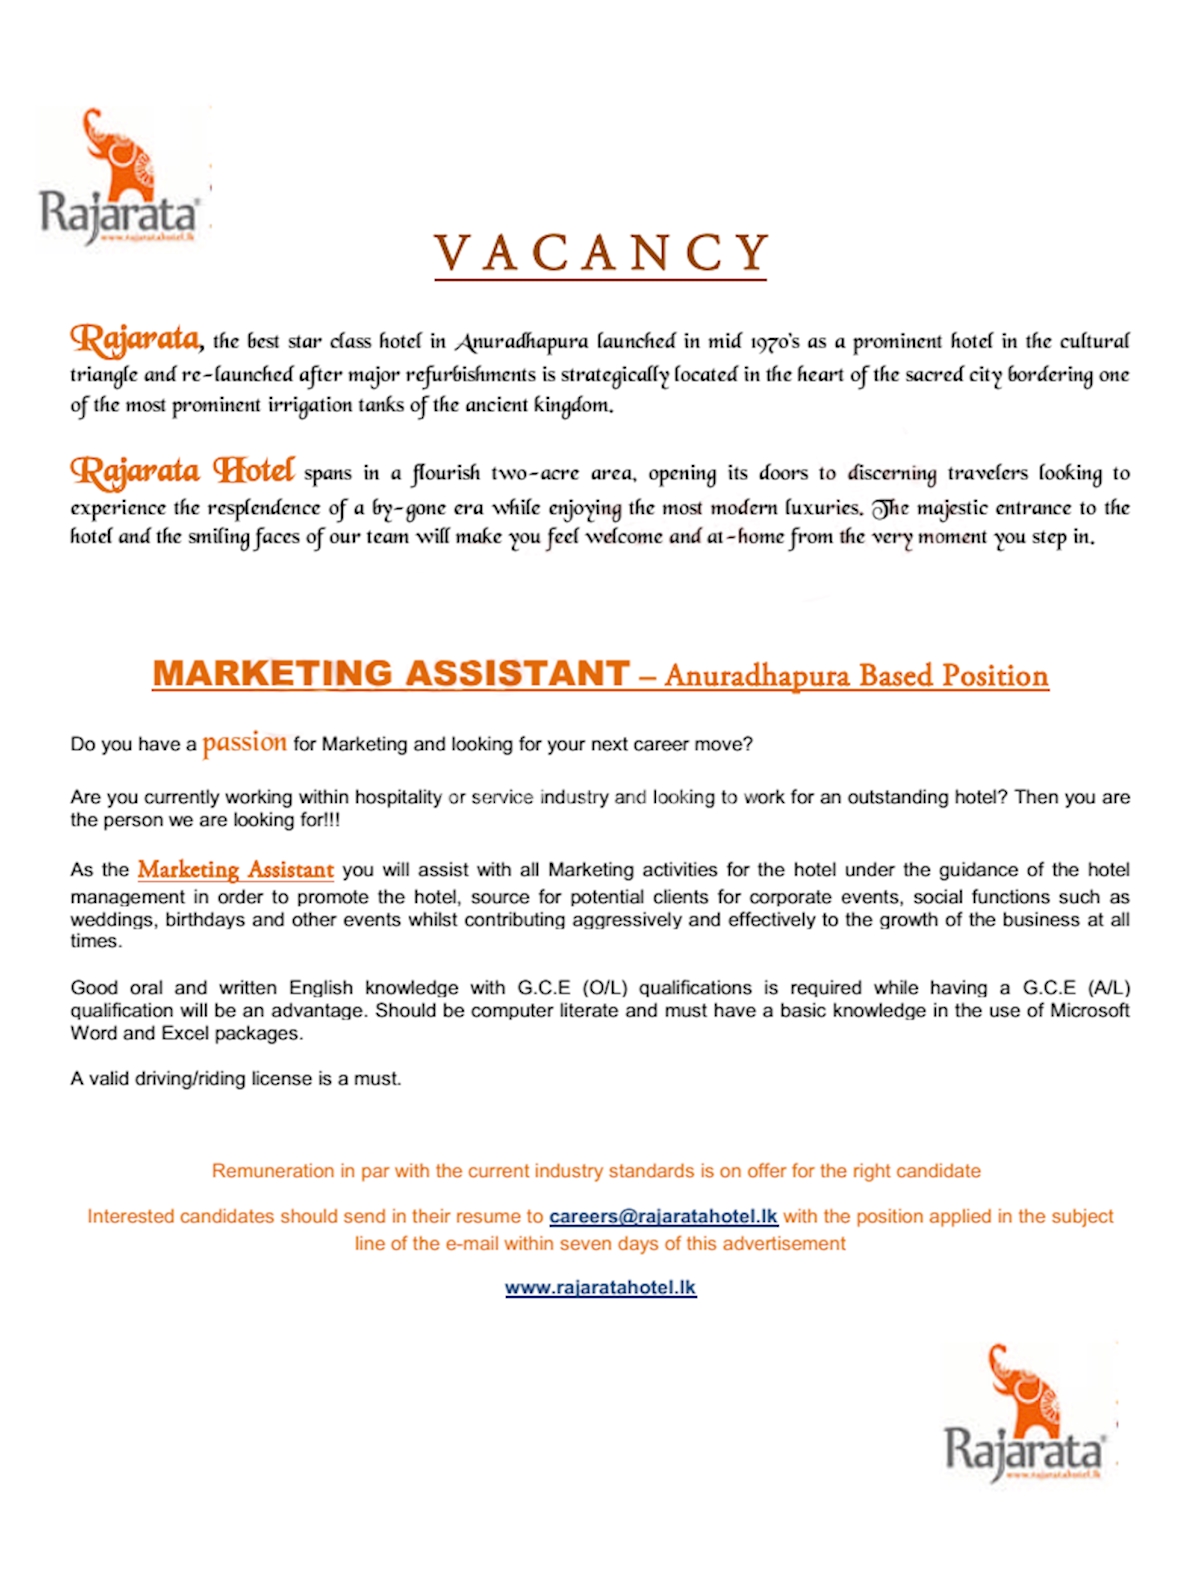 Marketing Assistant - Anuradhapura Based Position